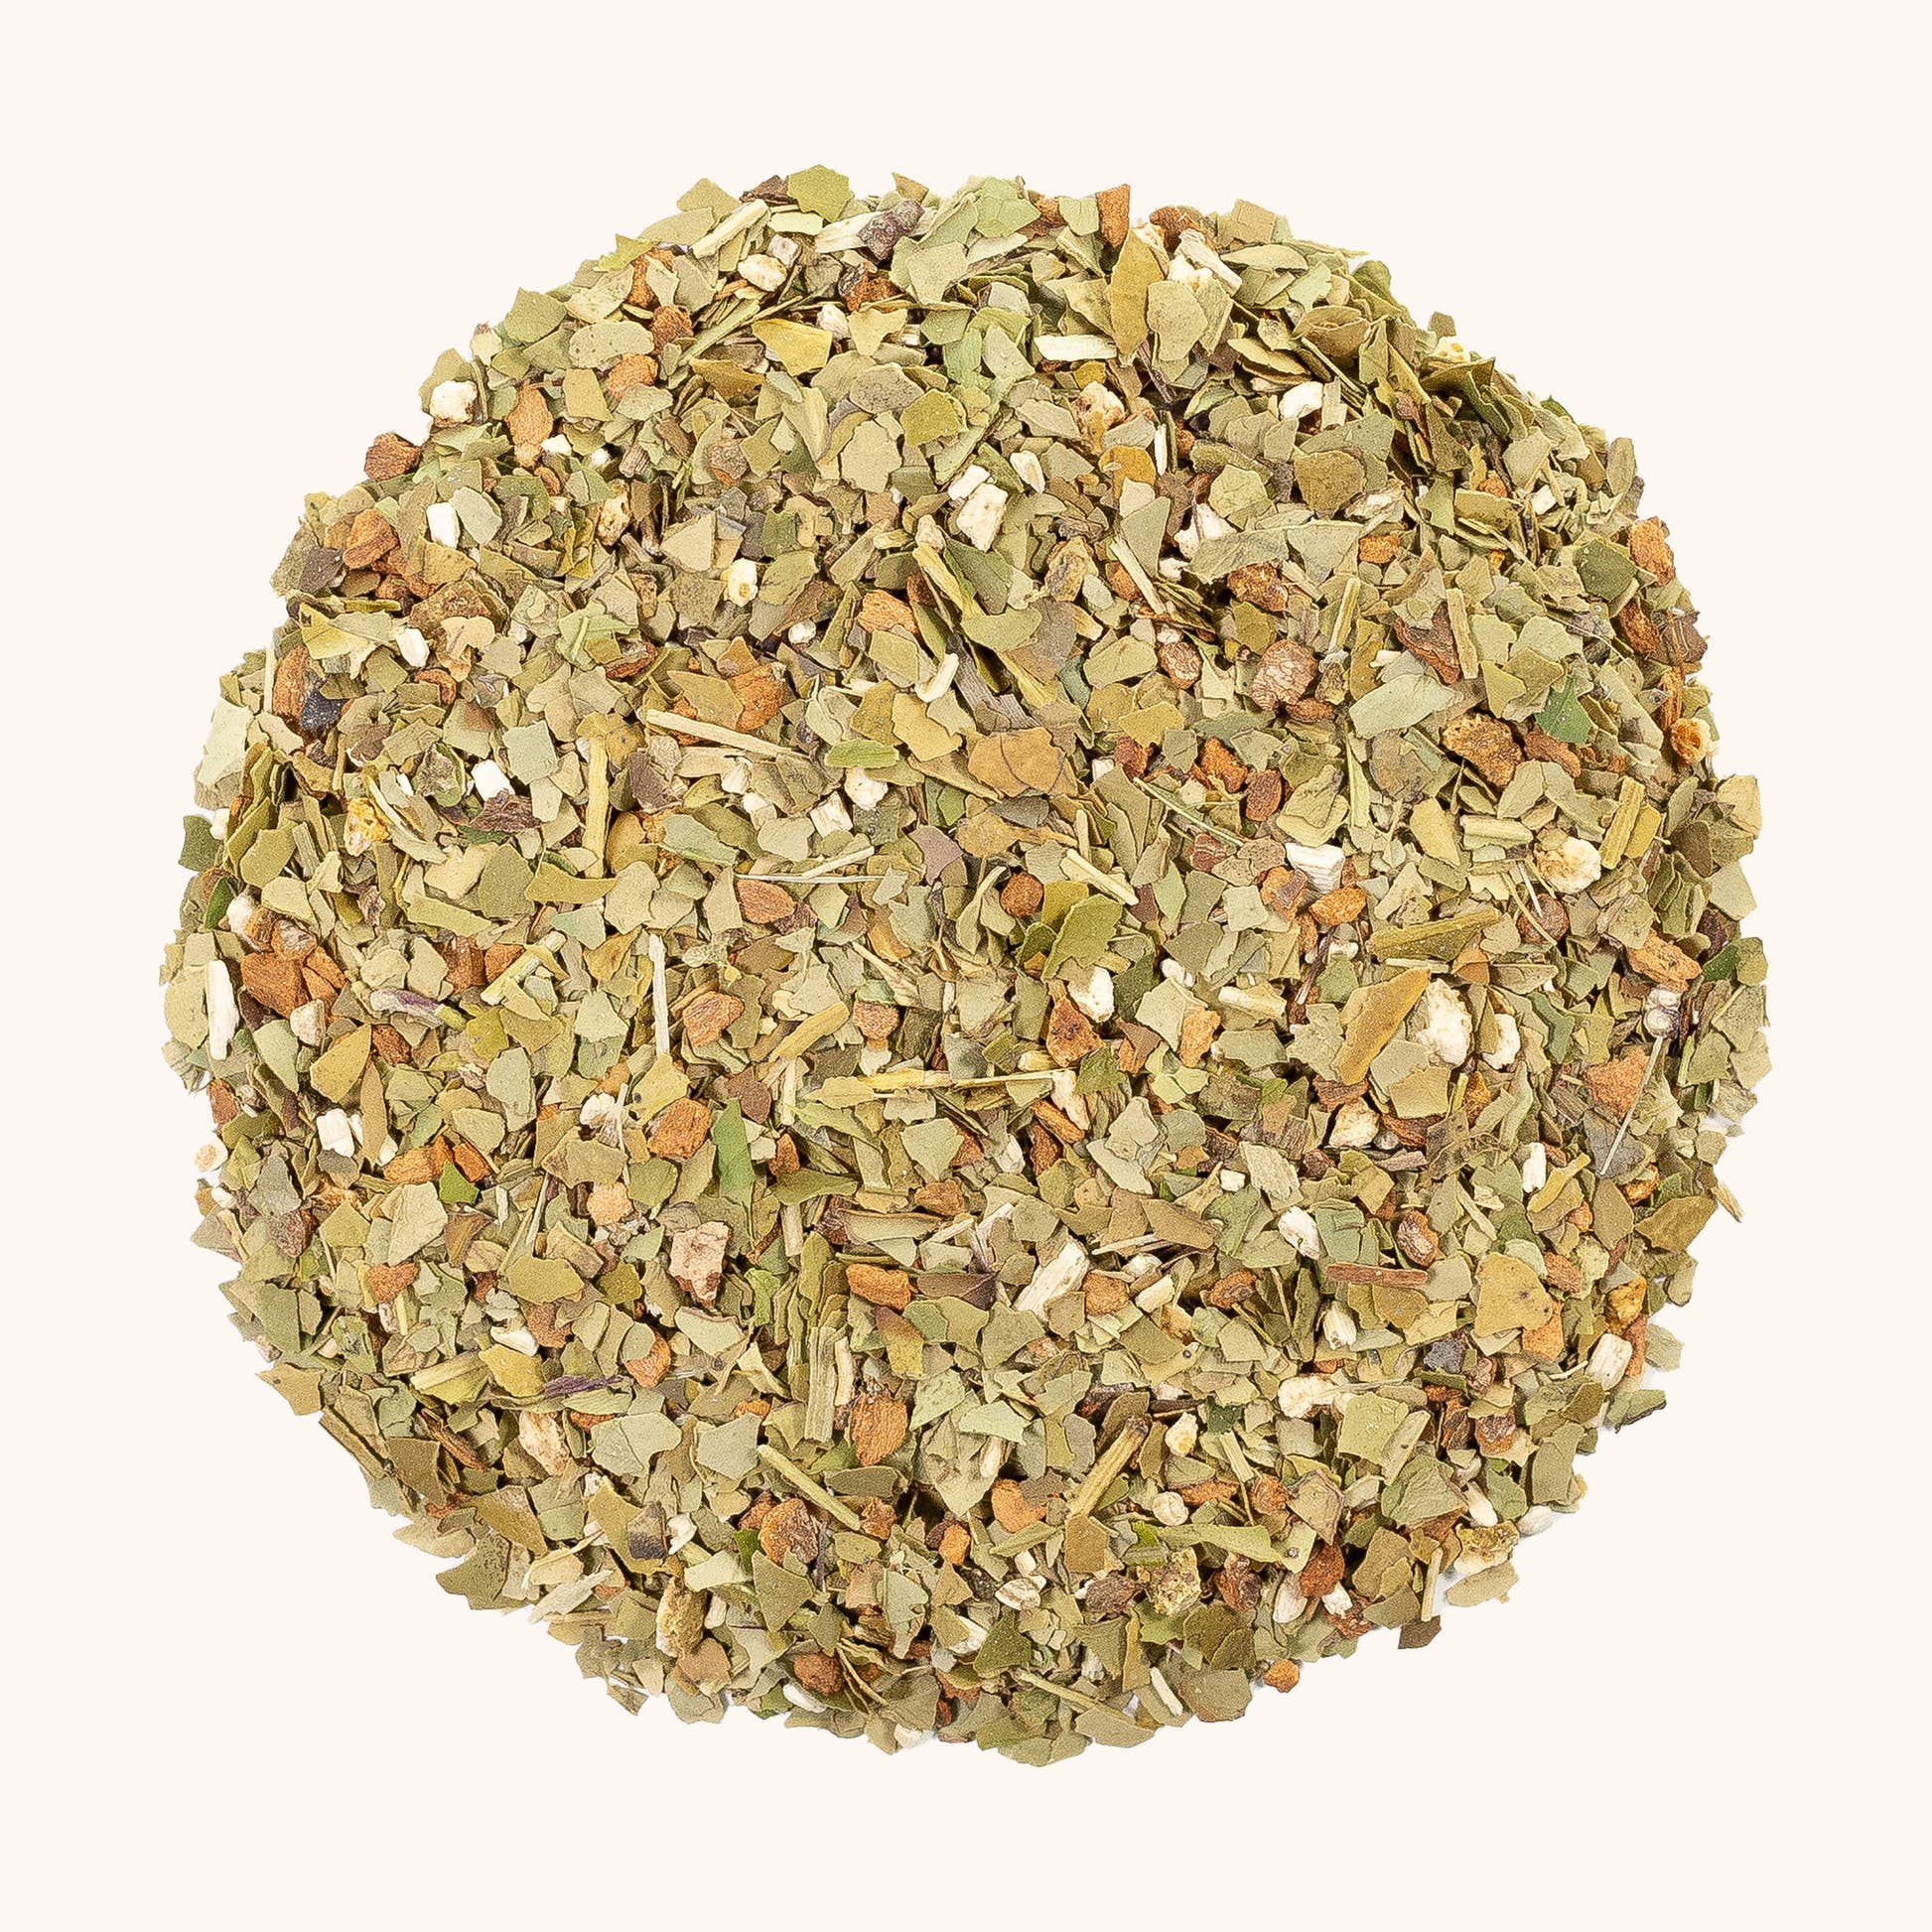 Mezclado de Mate by Davidson's Organic Teas loose leaf yerba mate tea